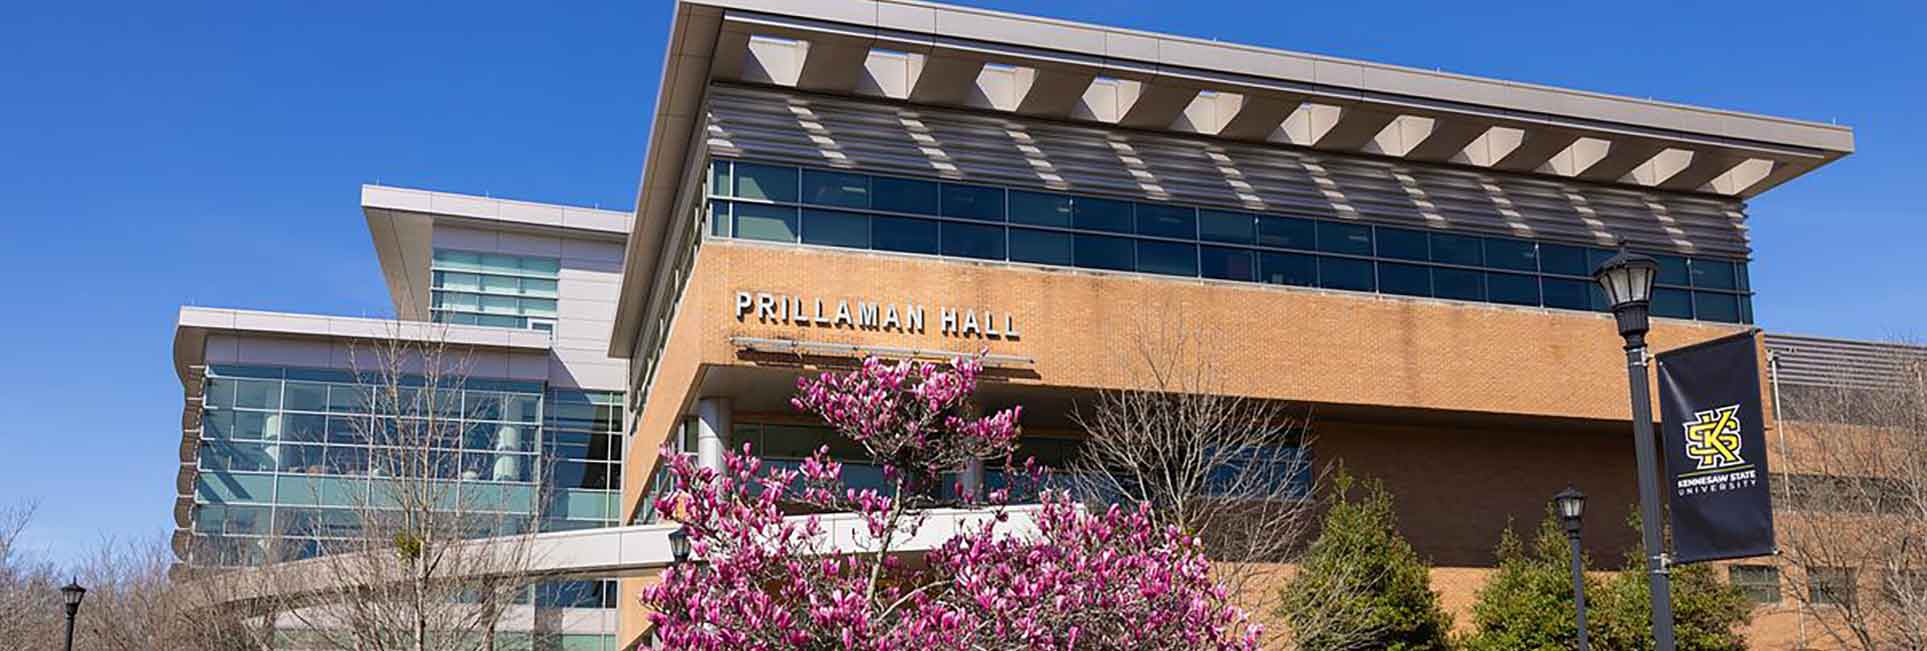 Prillaman hall at kennesaw state university.